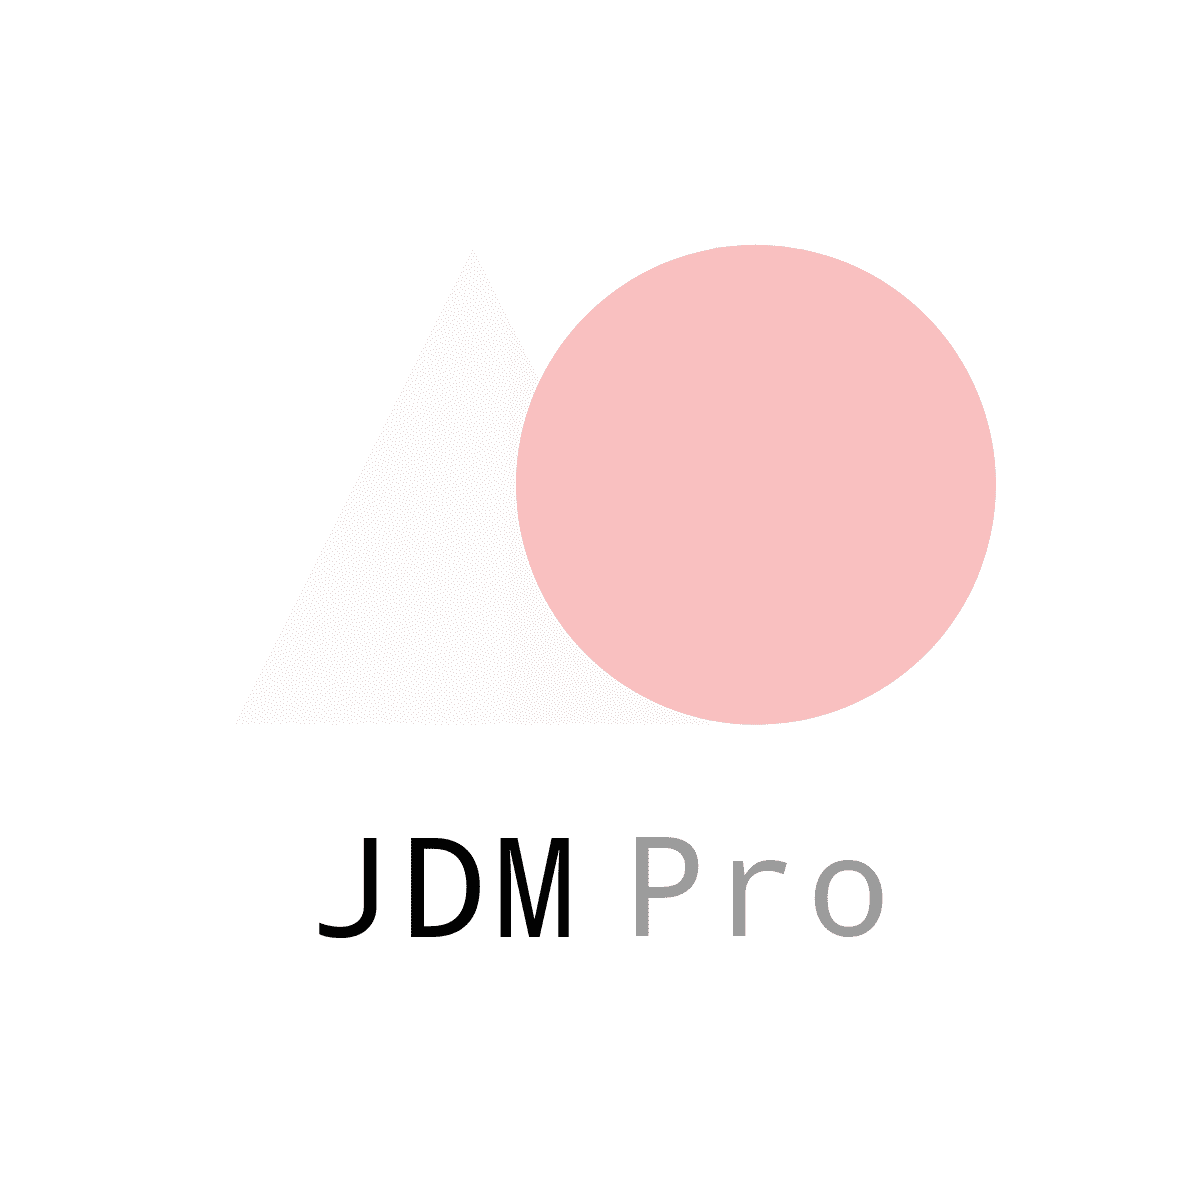 JDM Pro